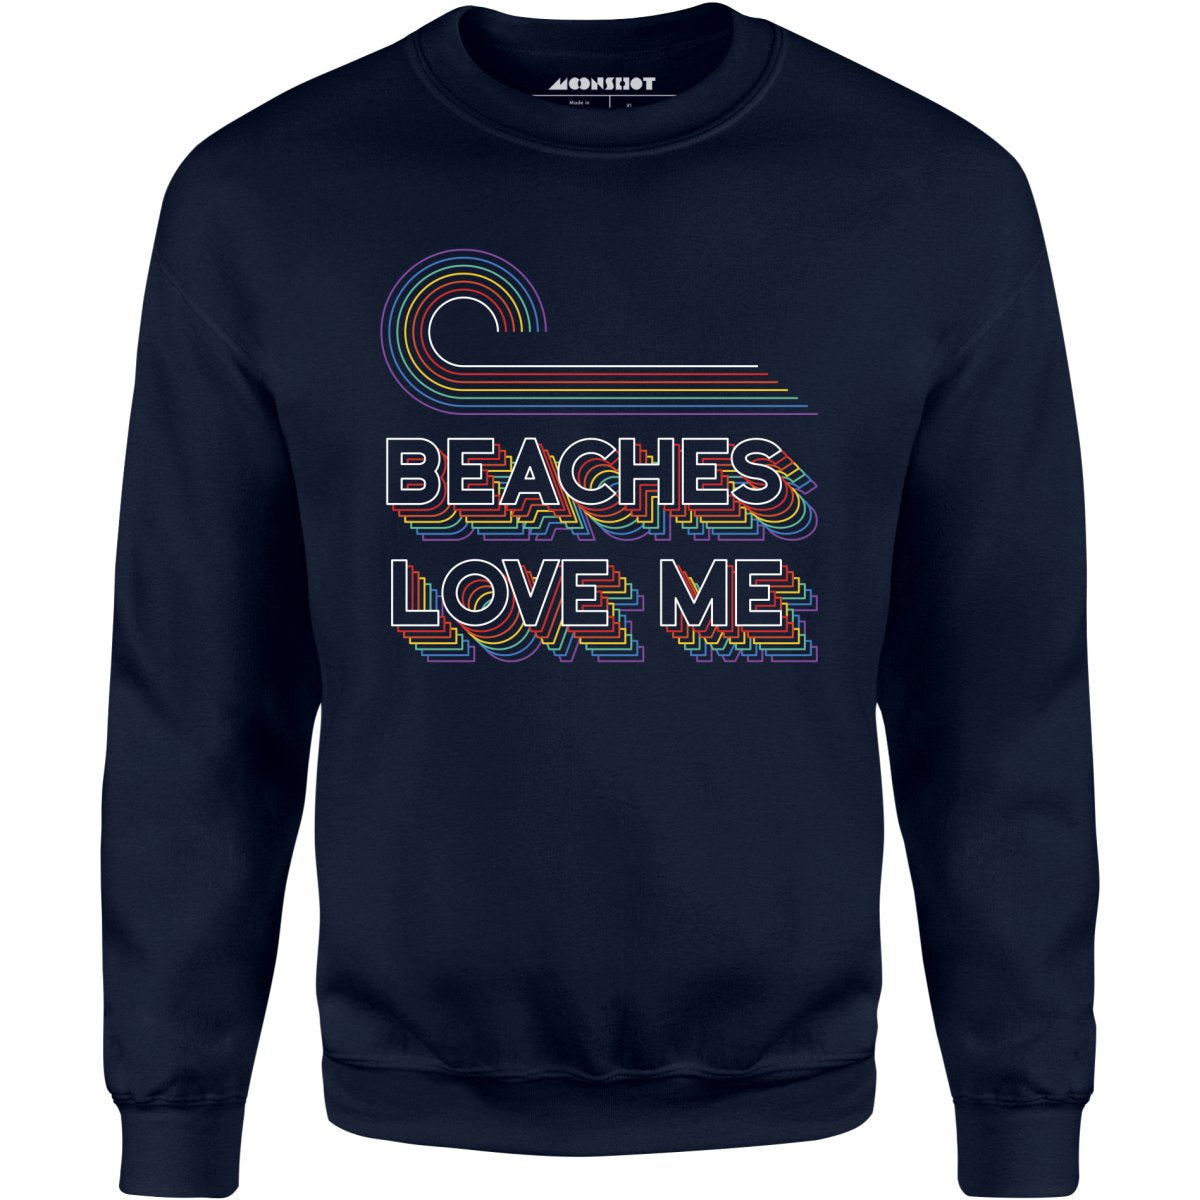 Beaches Love Me - Unisex Sweatshirt